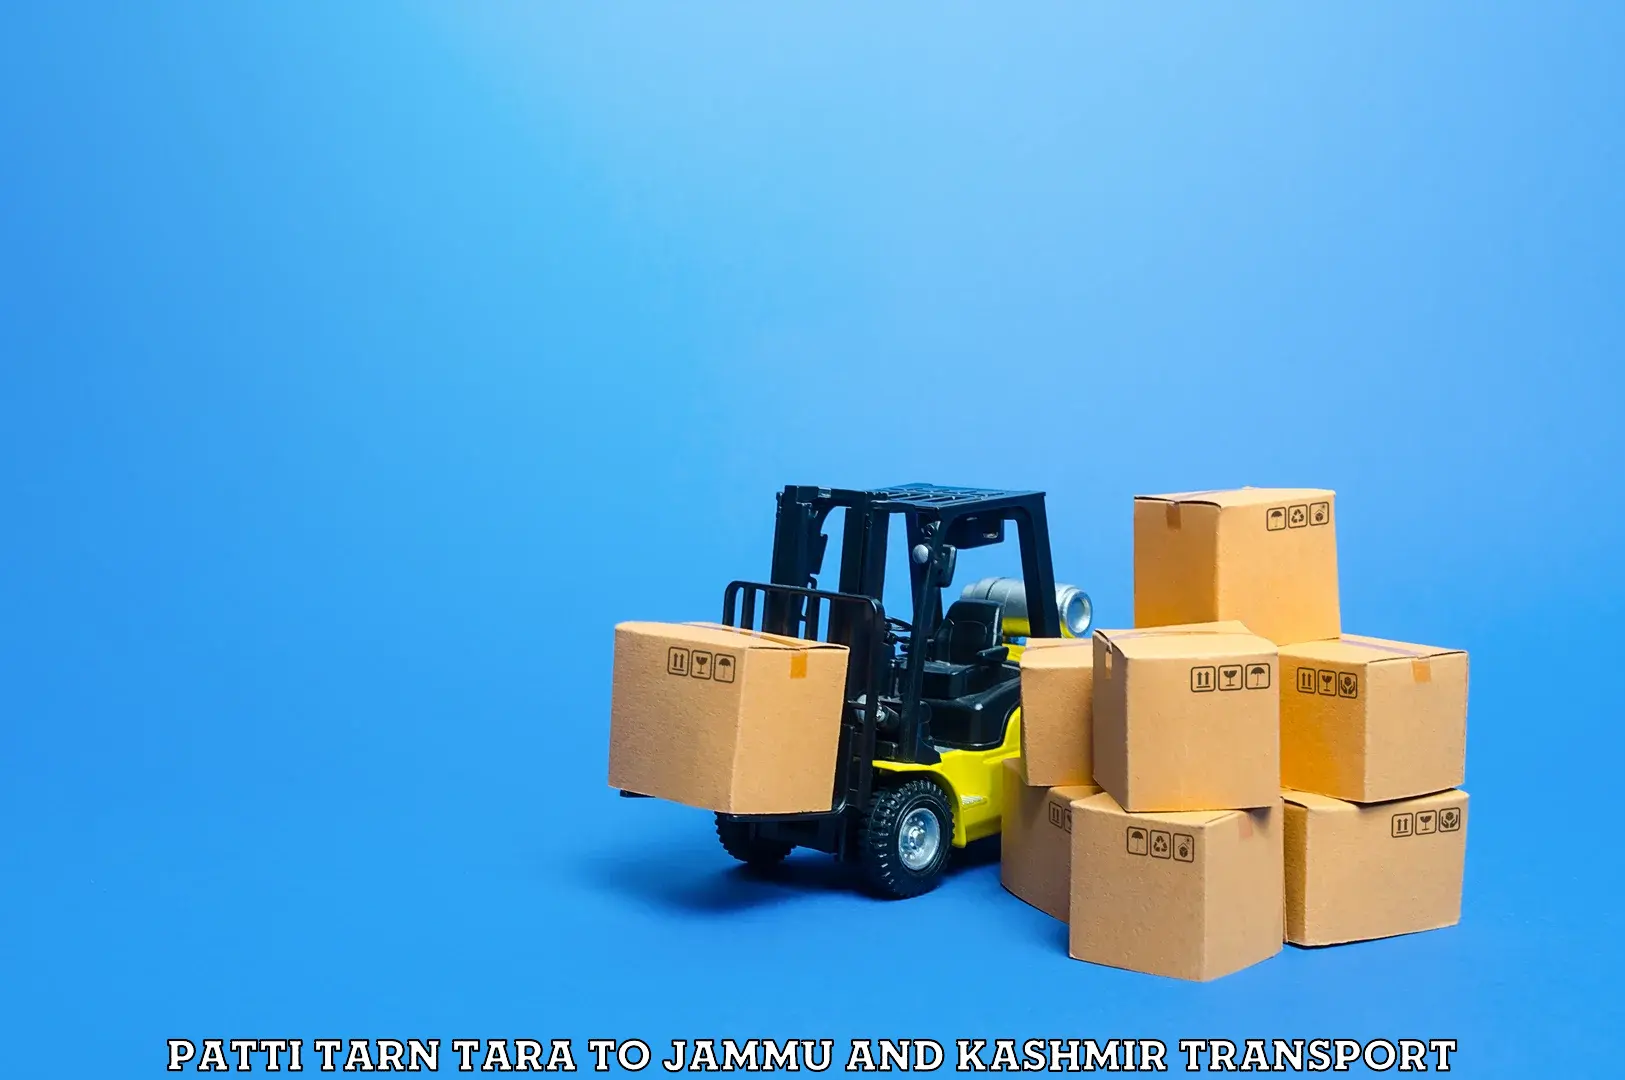 Truck transport companies in India Patti Tarn Tara to Bandipur